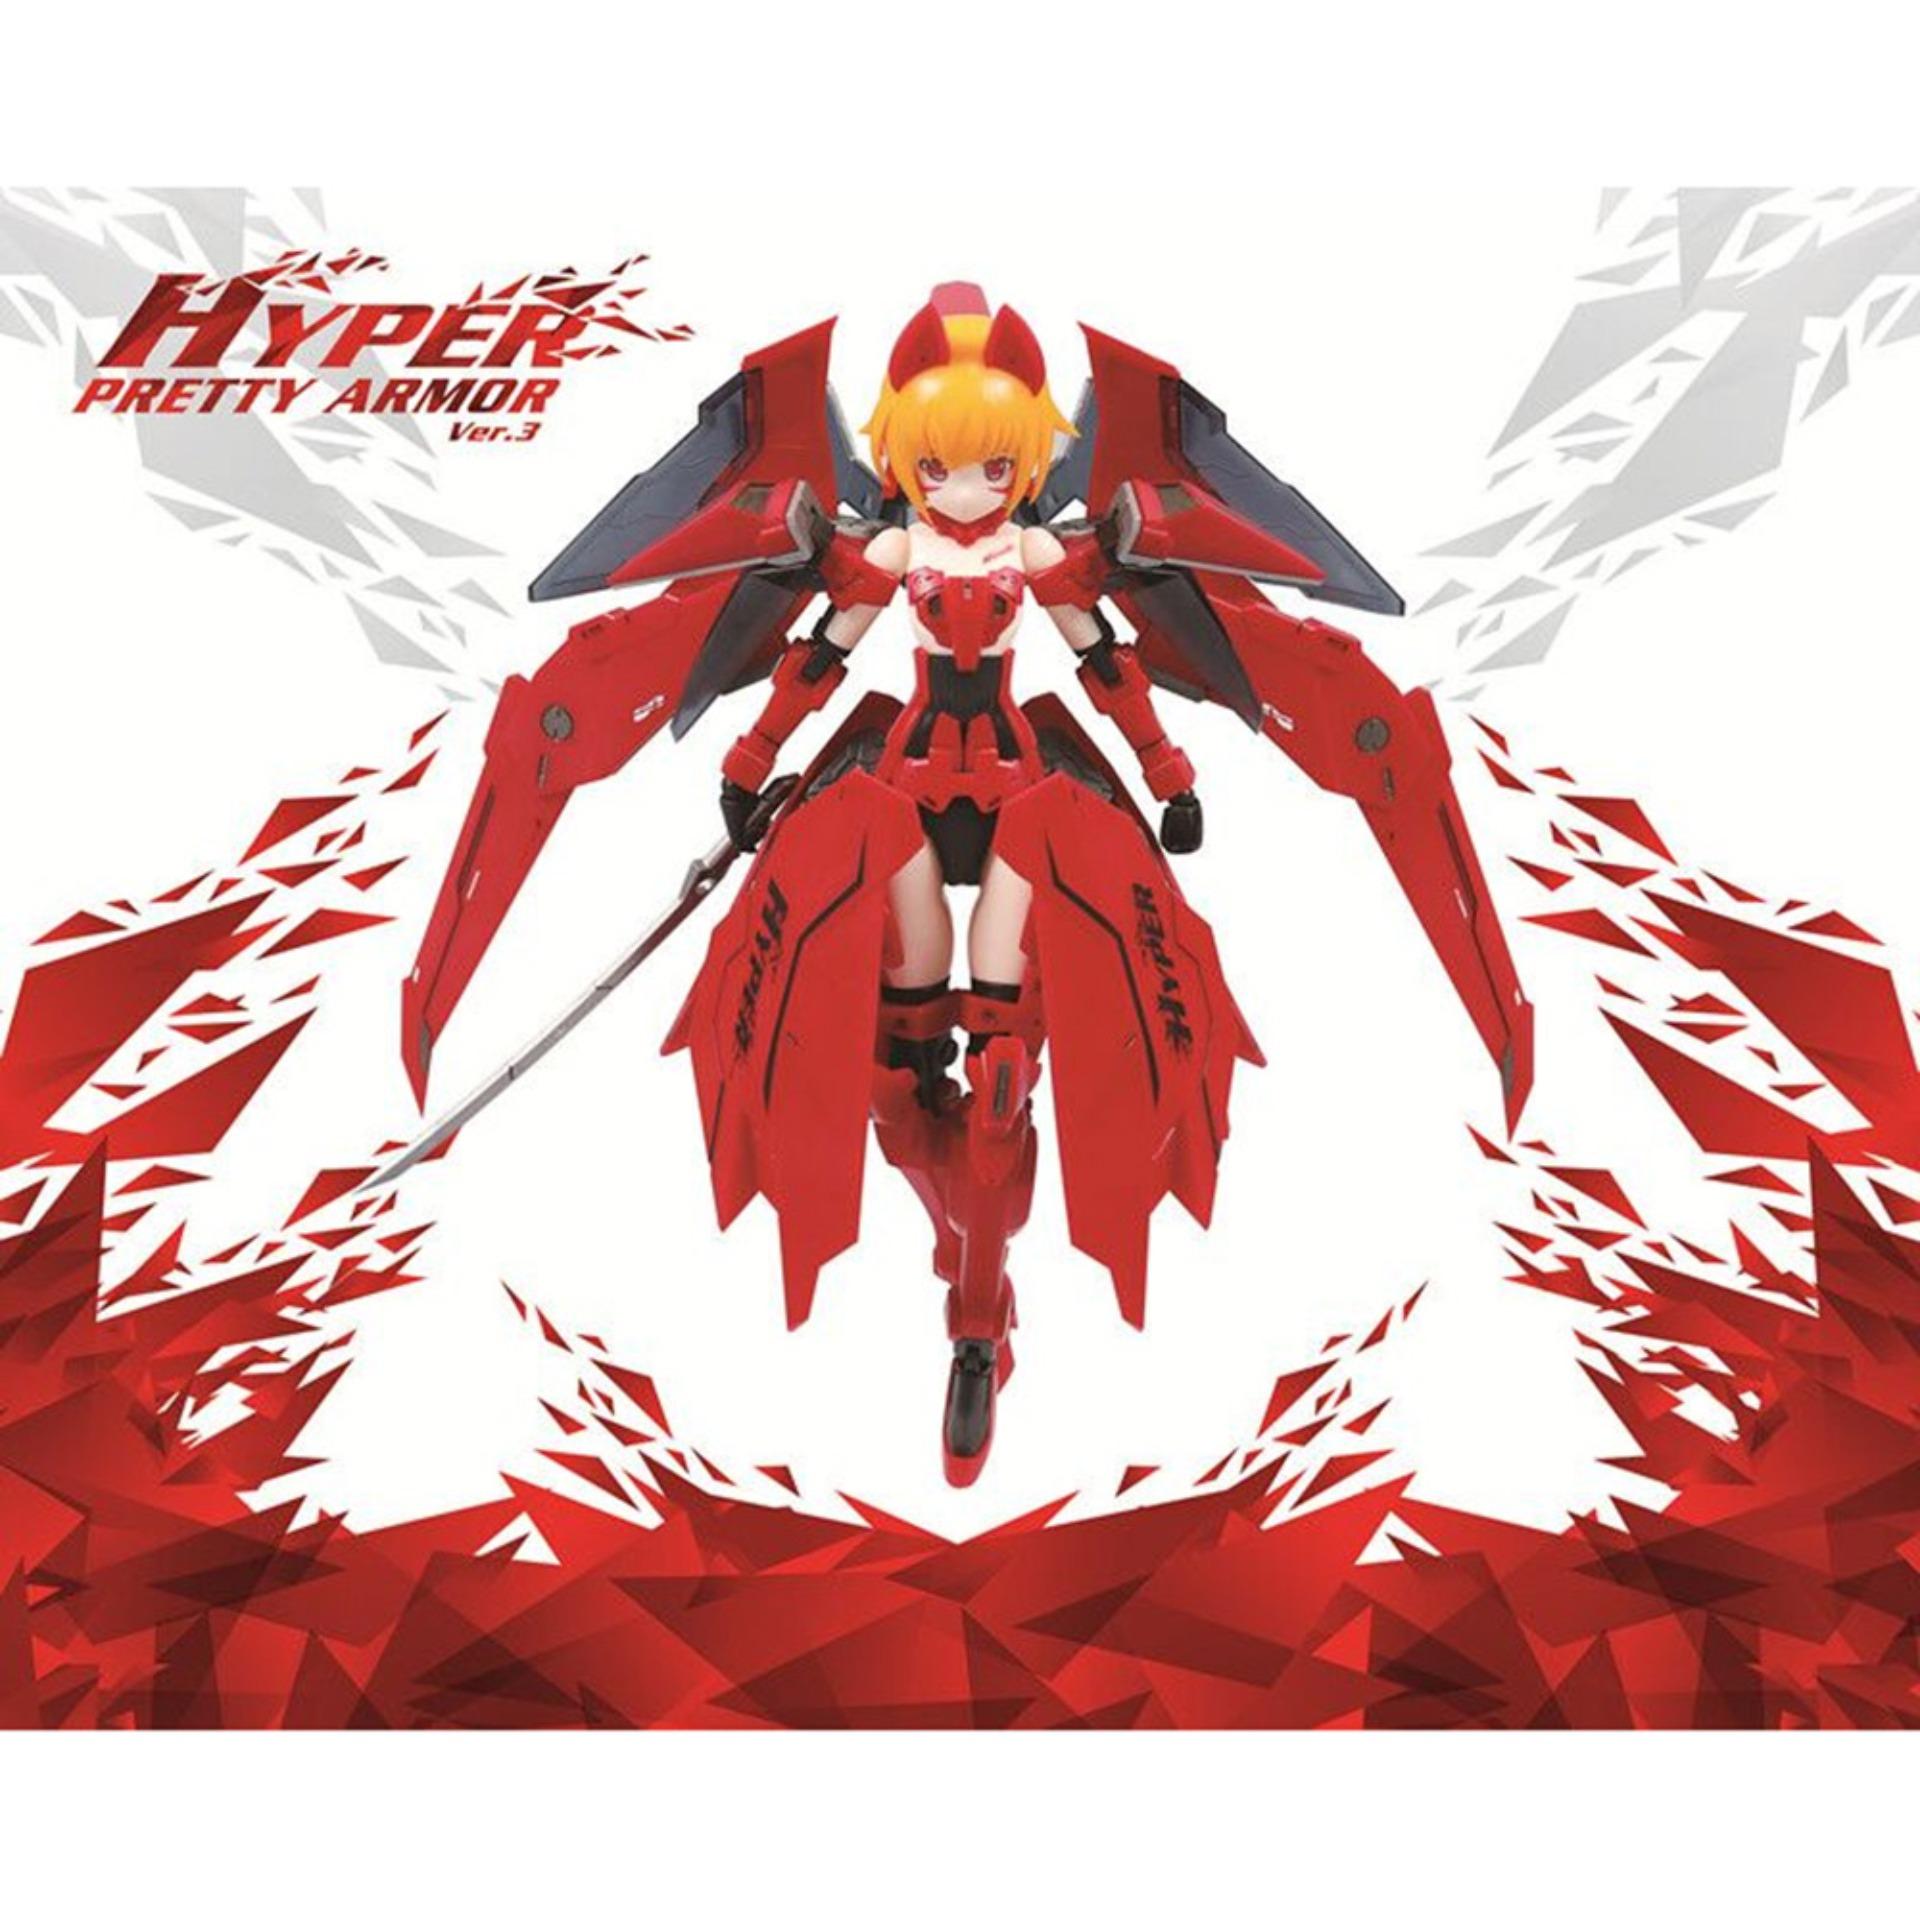 Model โมเดล งานแท้ 100% Arms Girl Hyper Pretty Armor Gundam ver 3.0 Red version 1/8 Ver Figma ฟิกม่า Anime ขยับแขน-ขาได้ ของขวัญ Gift ของสะสมหายาก อนิเมะ การ์ตูน มังงะ Doll ตุ๊กตา สั่งและนำเข้าจากญี่ปุ่น manga Figure ฟิกเกอร์